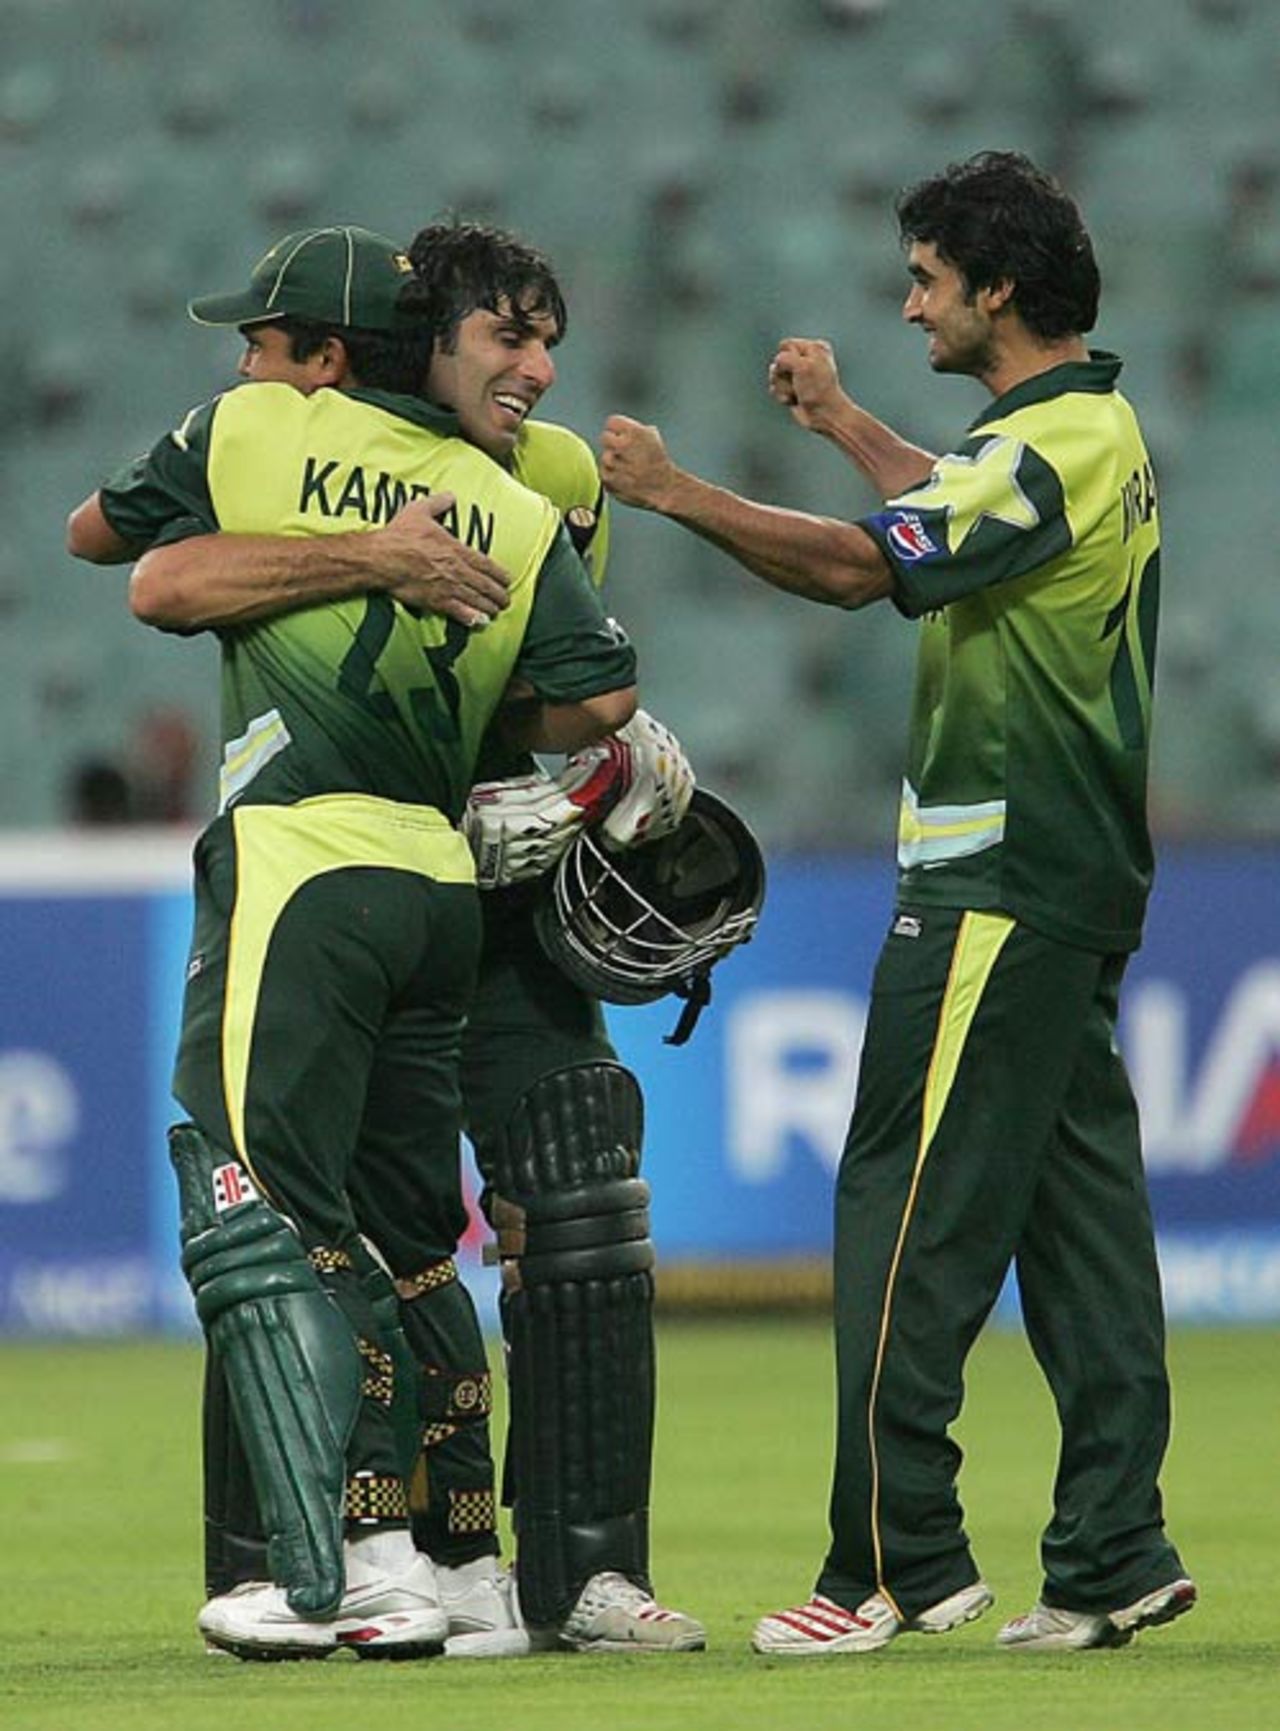 Pakistan players celebrate their six-wicket win over Australia, Australia v Pakistan, Group F, ICC World Twenty20, Johannesburg, September 18, 2007

